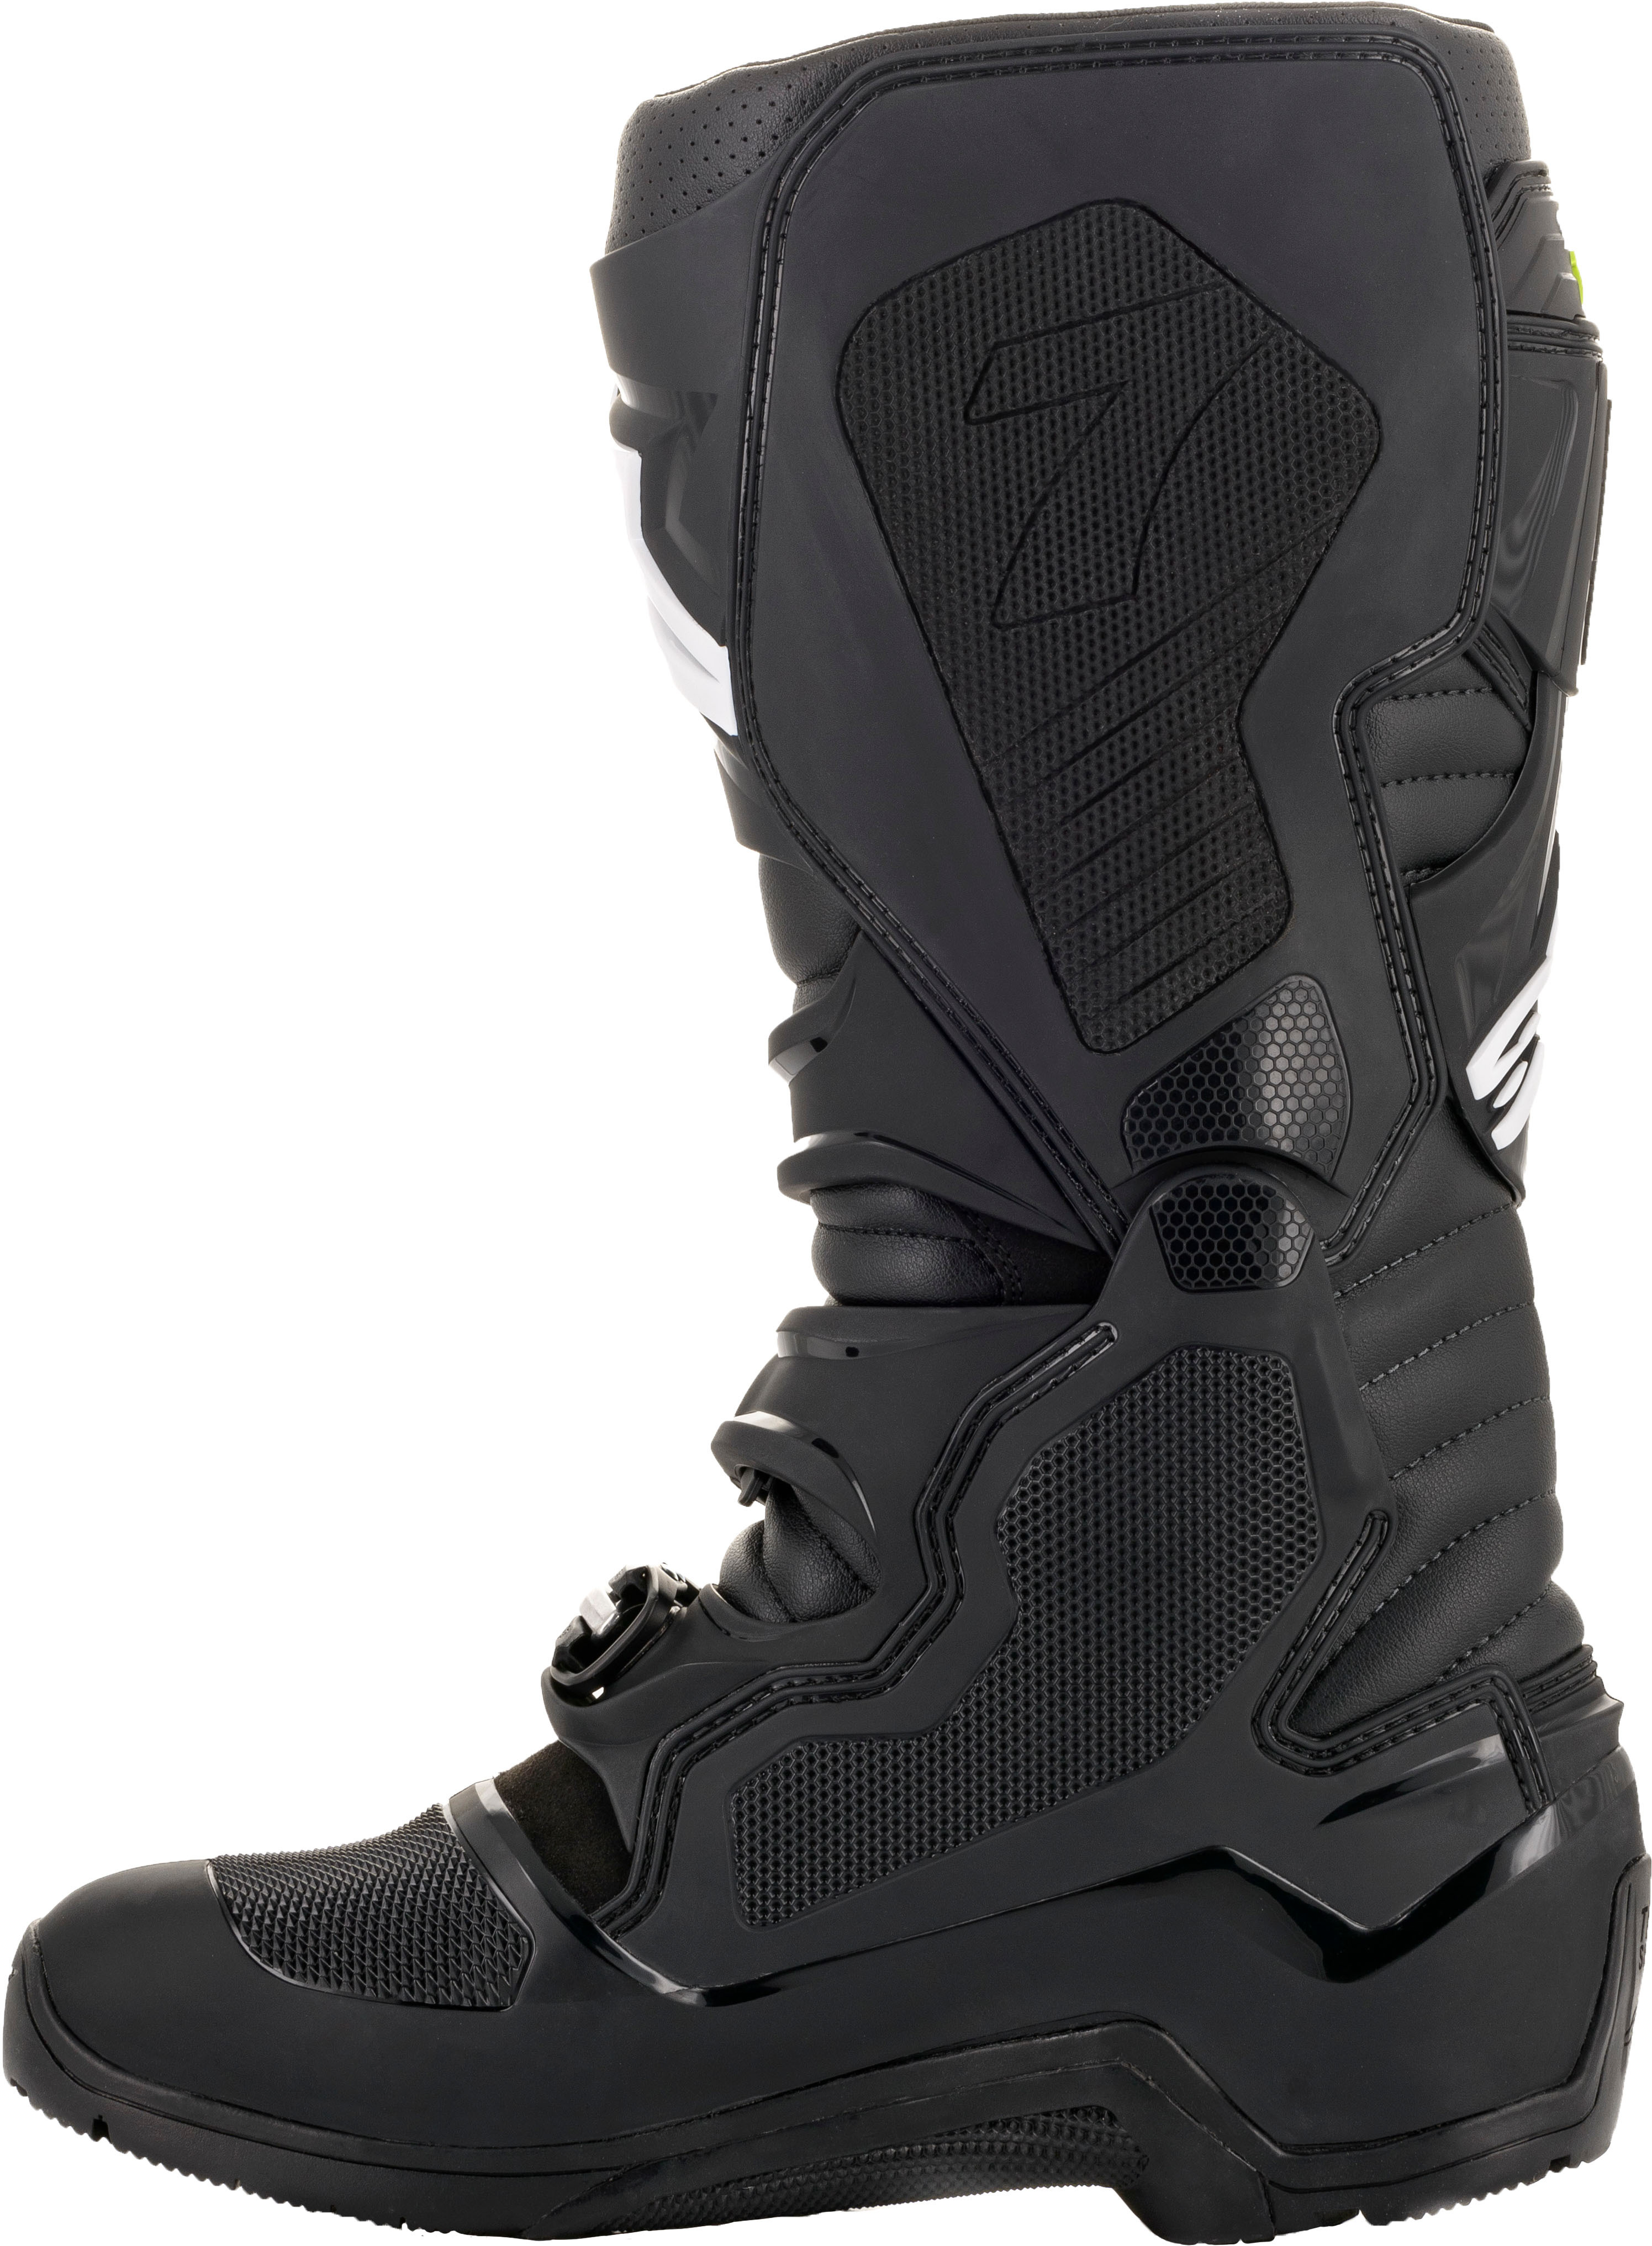 Tech 7 Enduro Drystar Boots Black/Grey US 10 - Click Image to Close